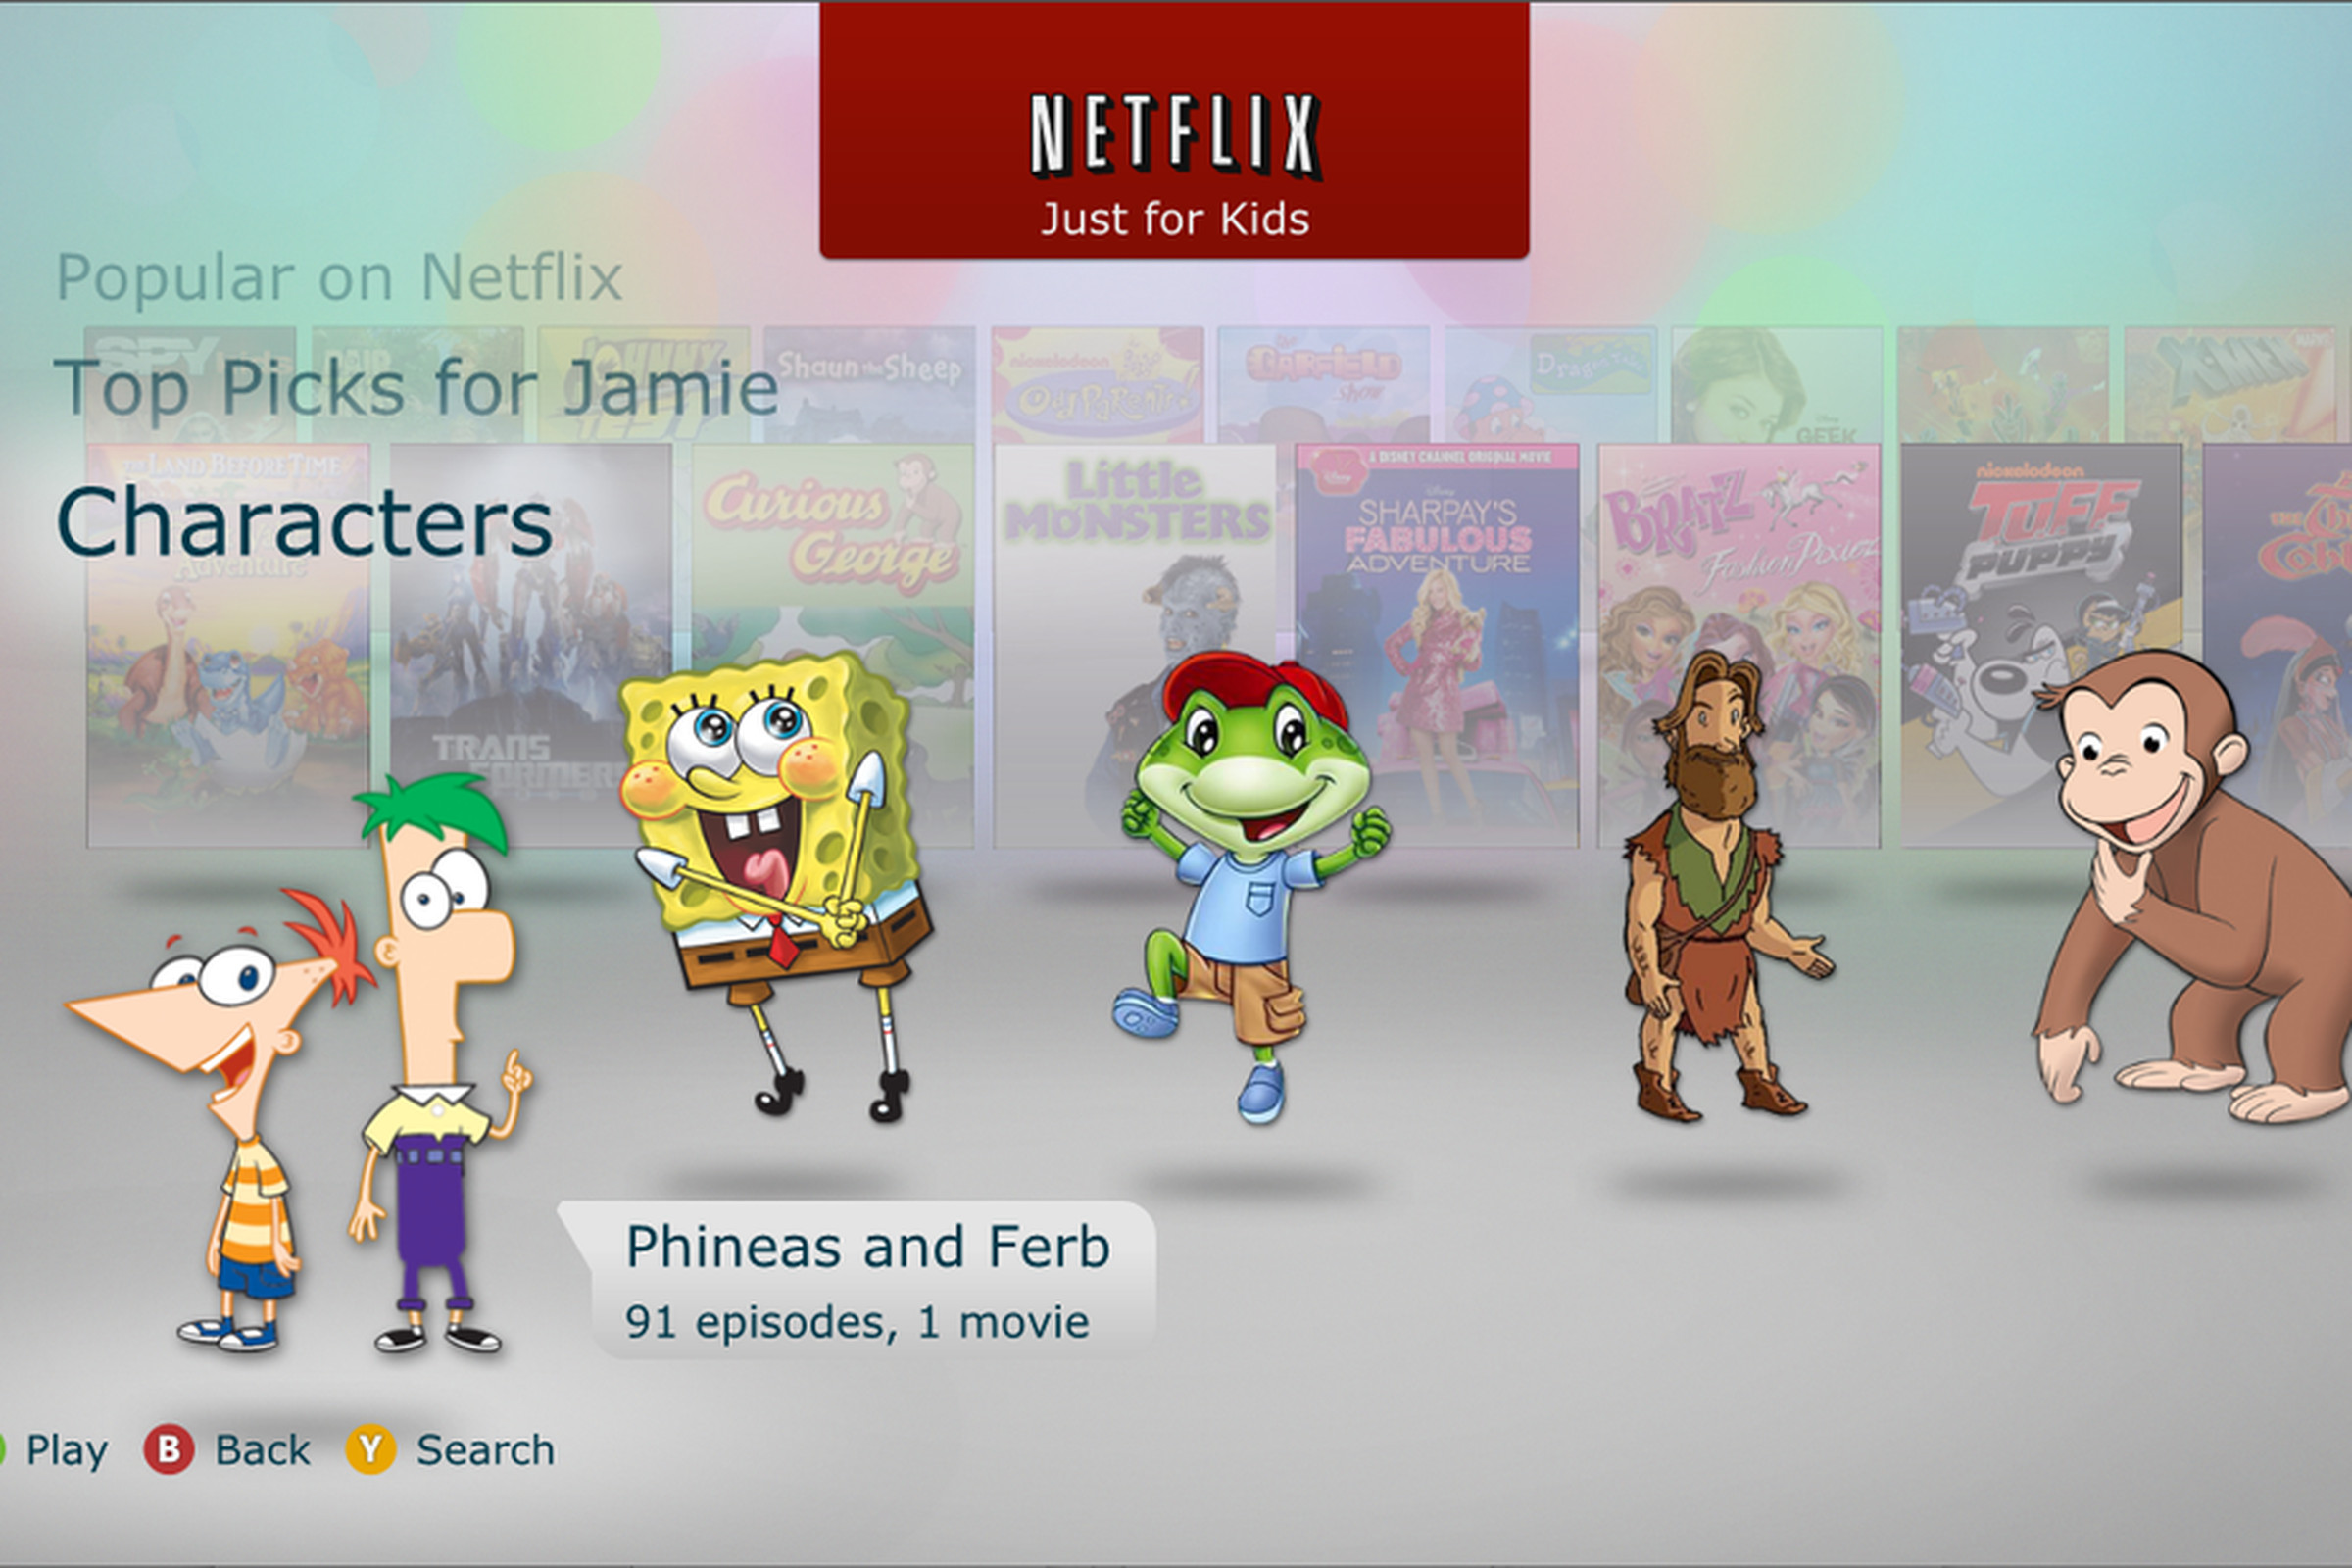 Netflix just for kids